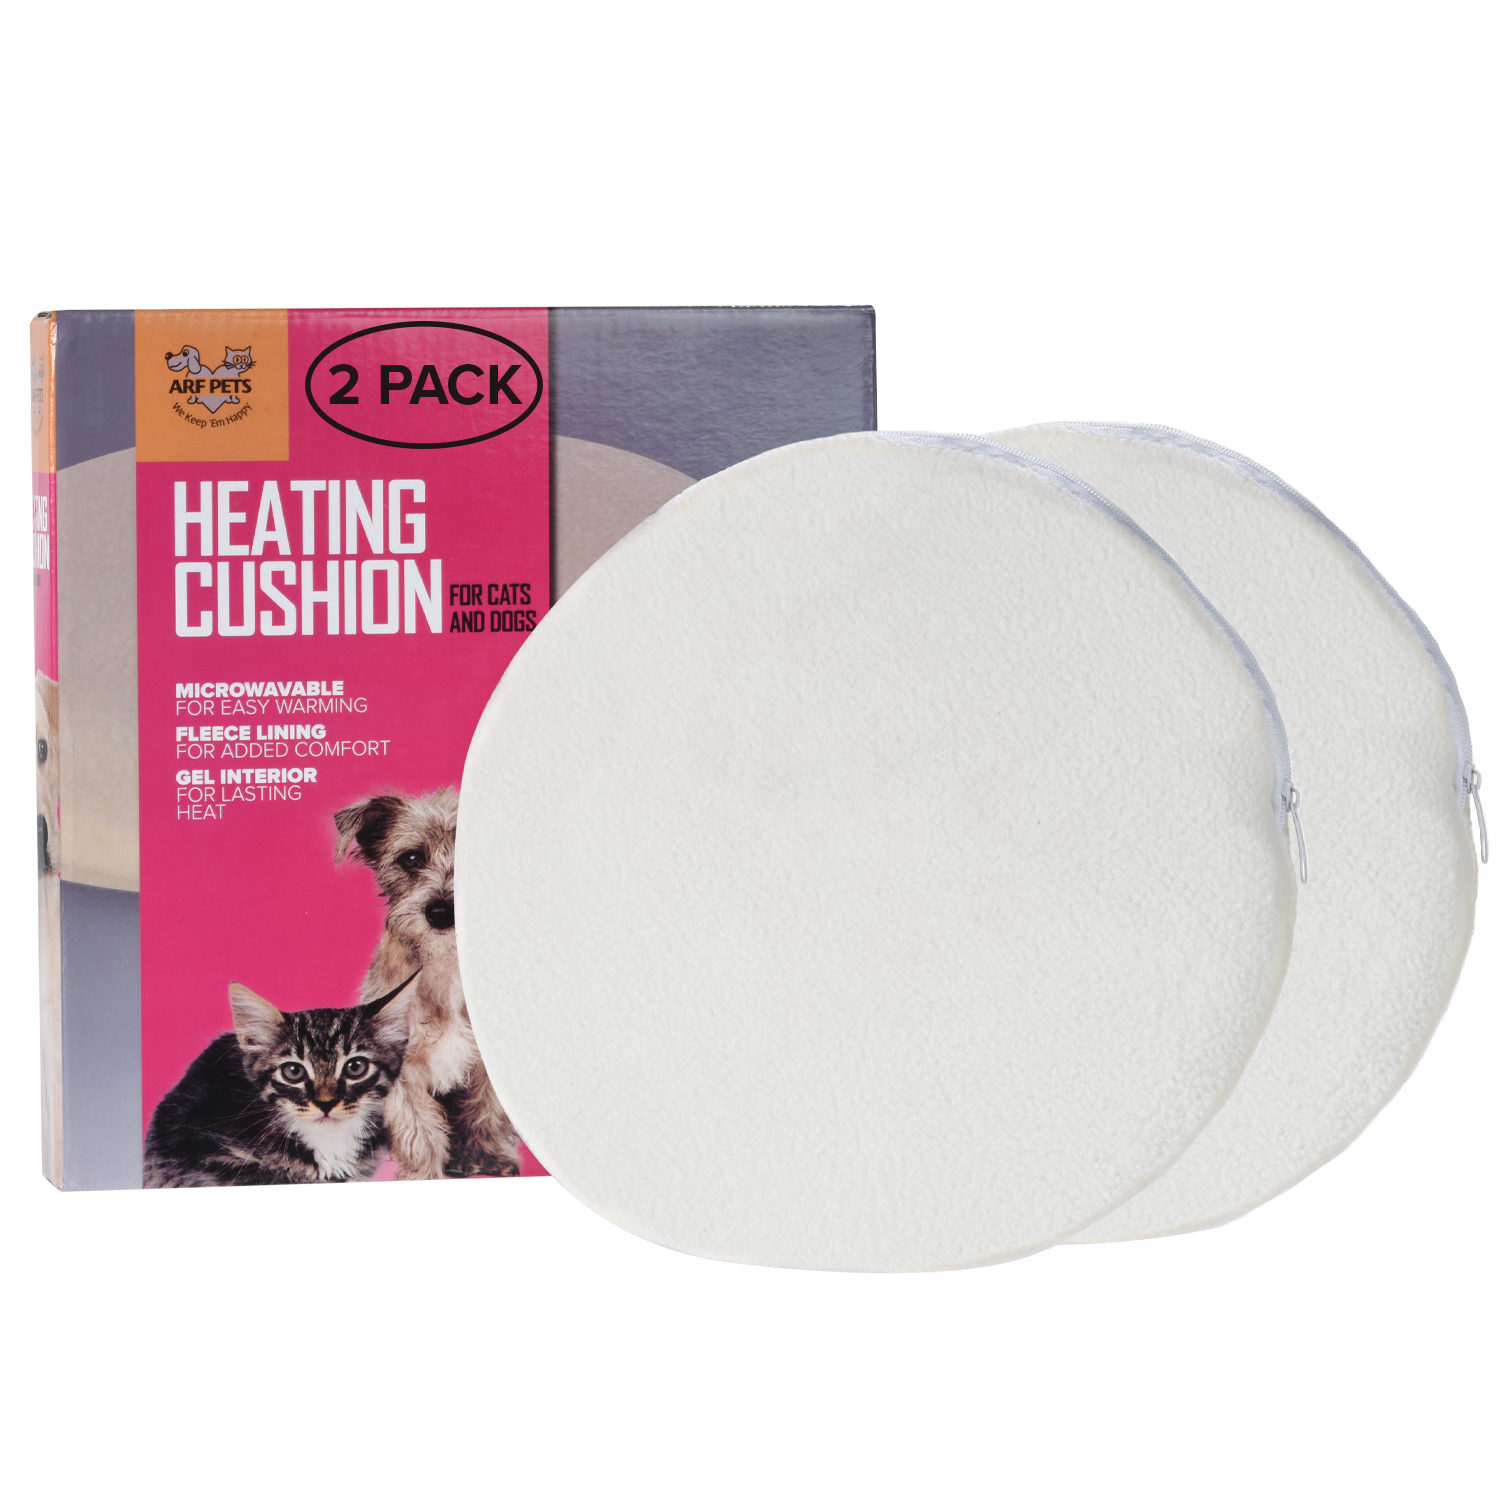 Microwavable Pet Heating Pad 2 Pack